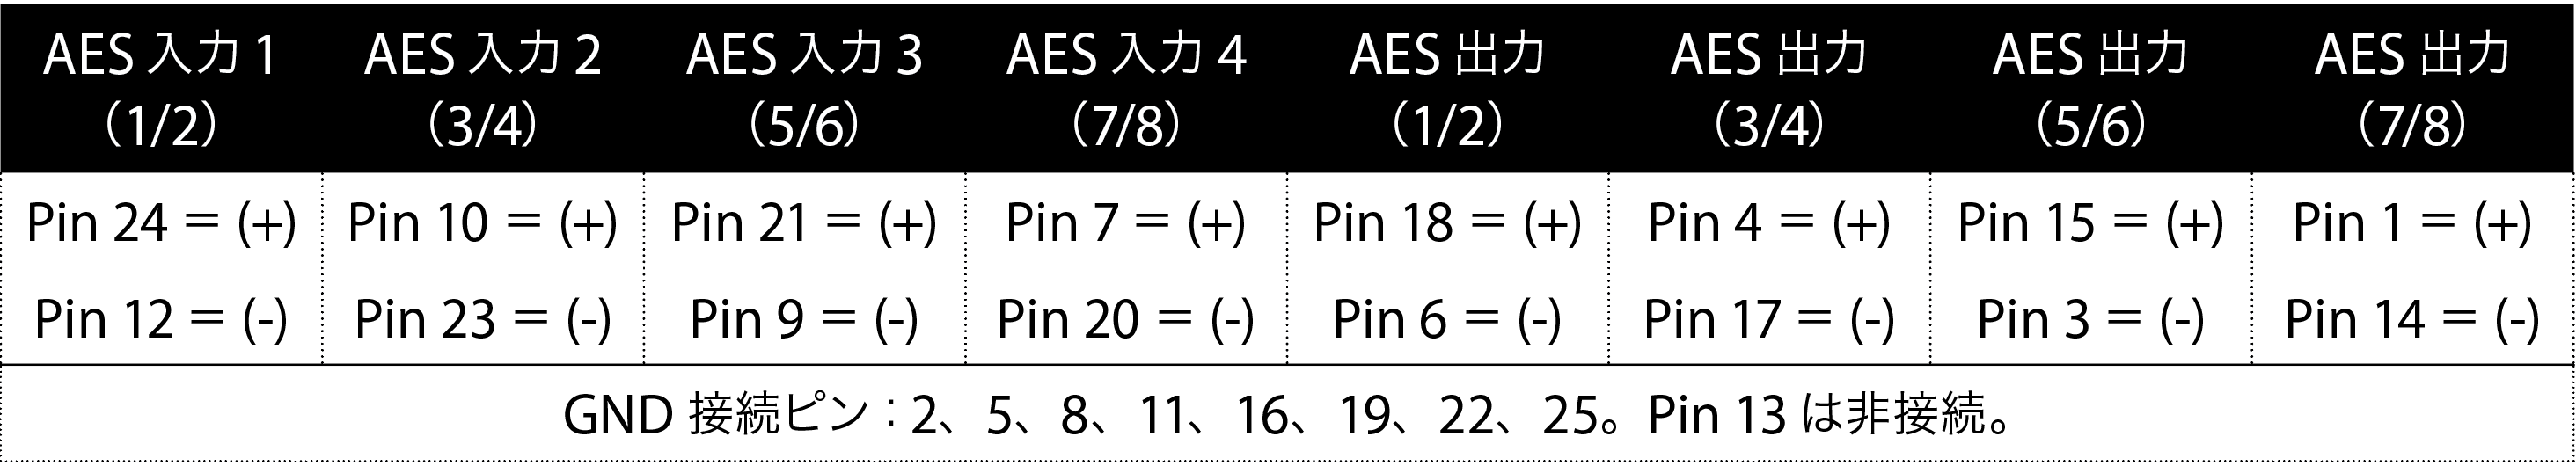 AES25-4F4MPro